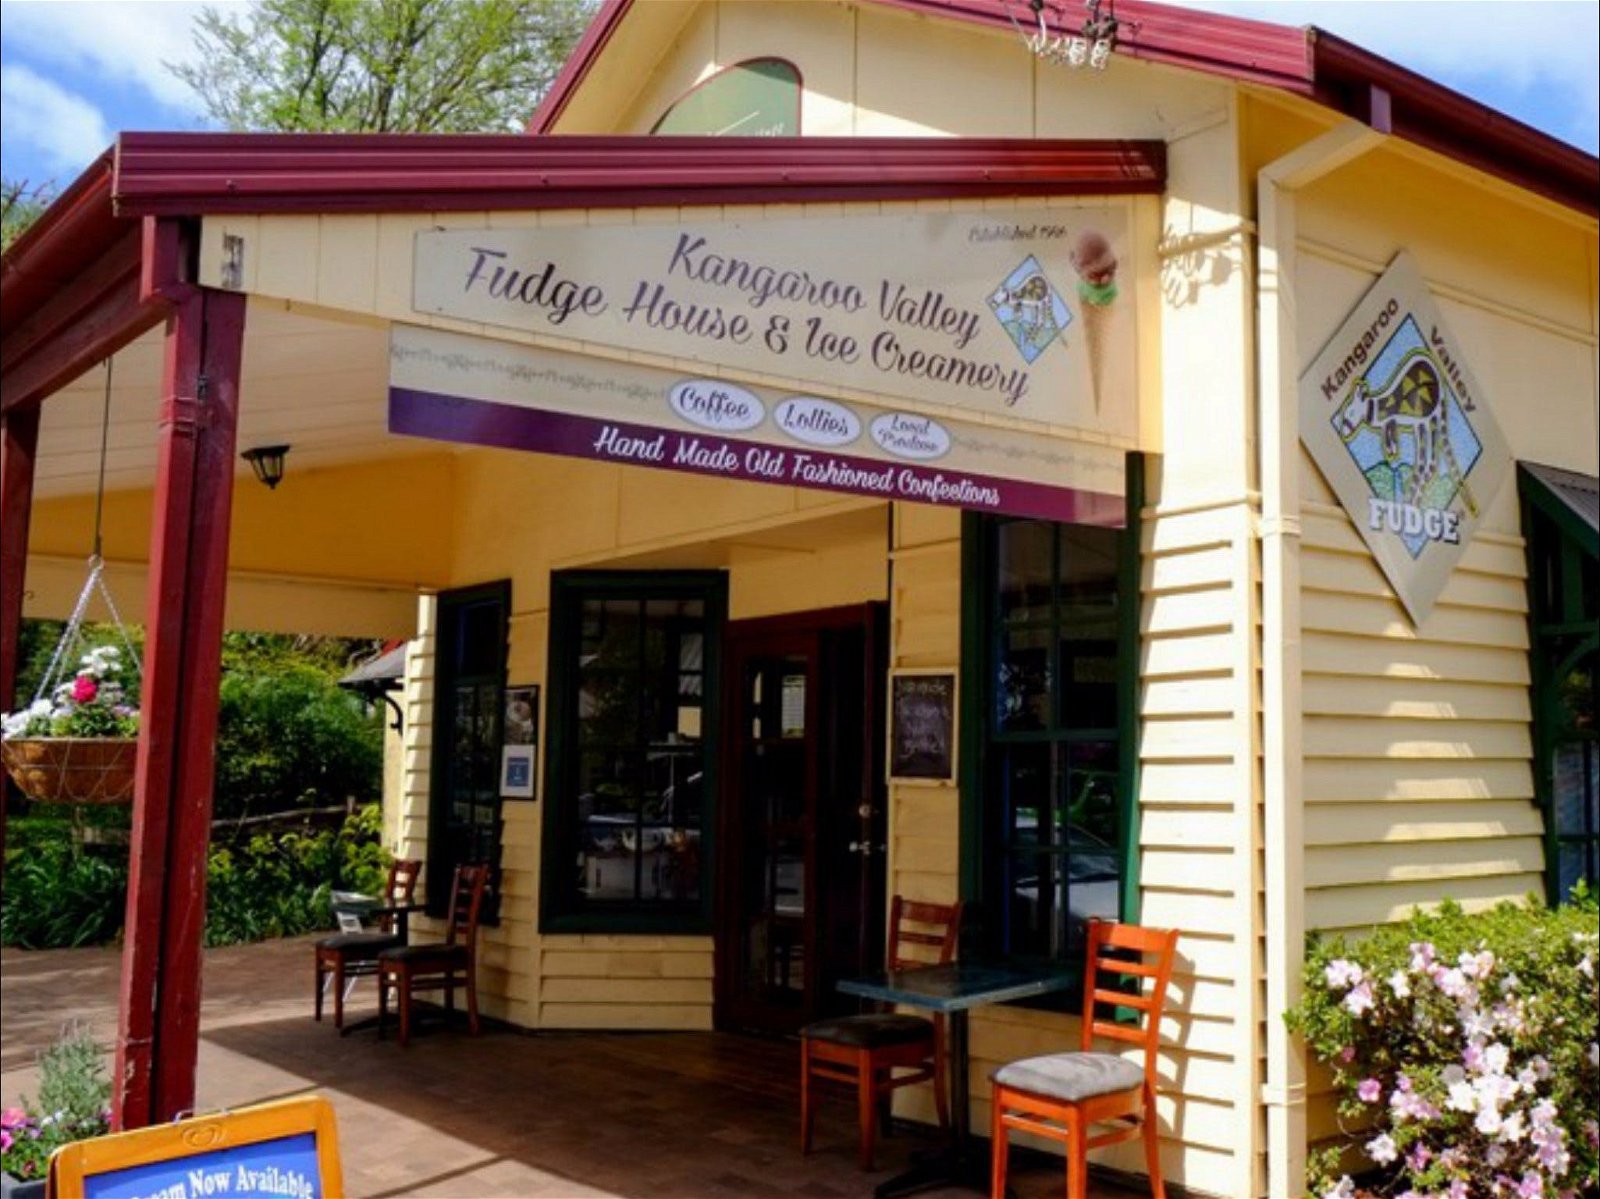 Kangaroo Valley Fudge House and Ice Creamery - Broome Tourism